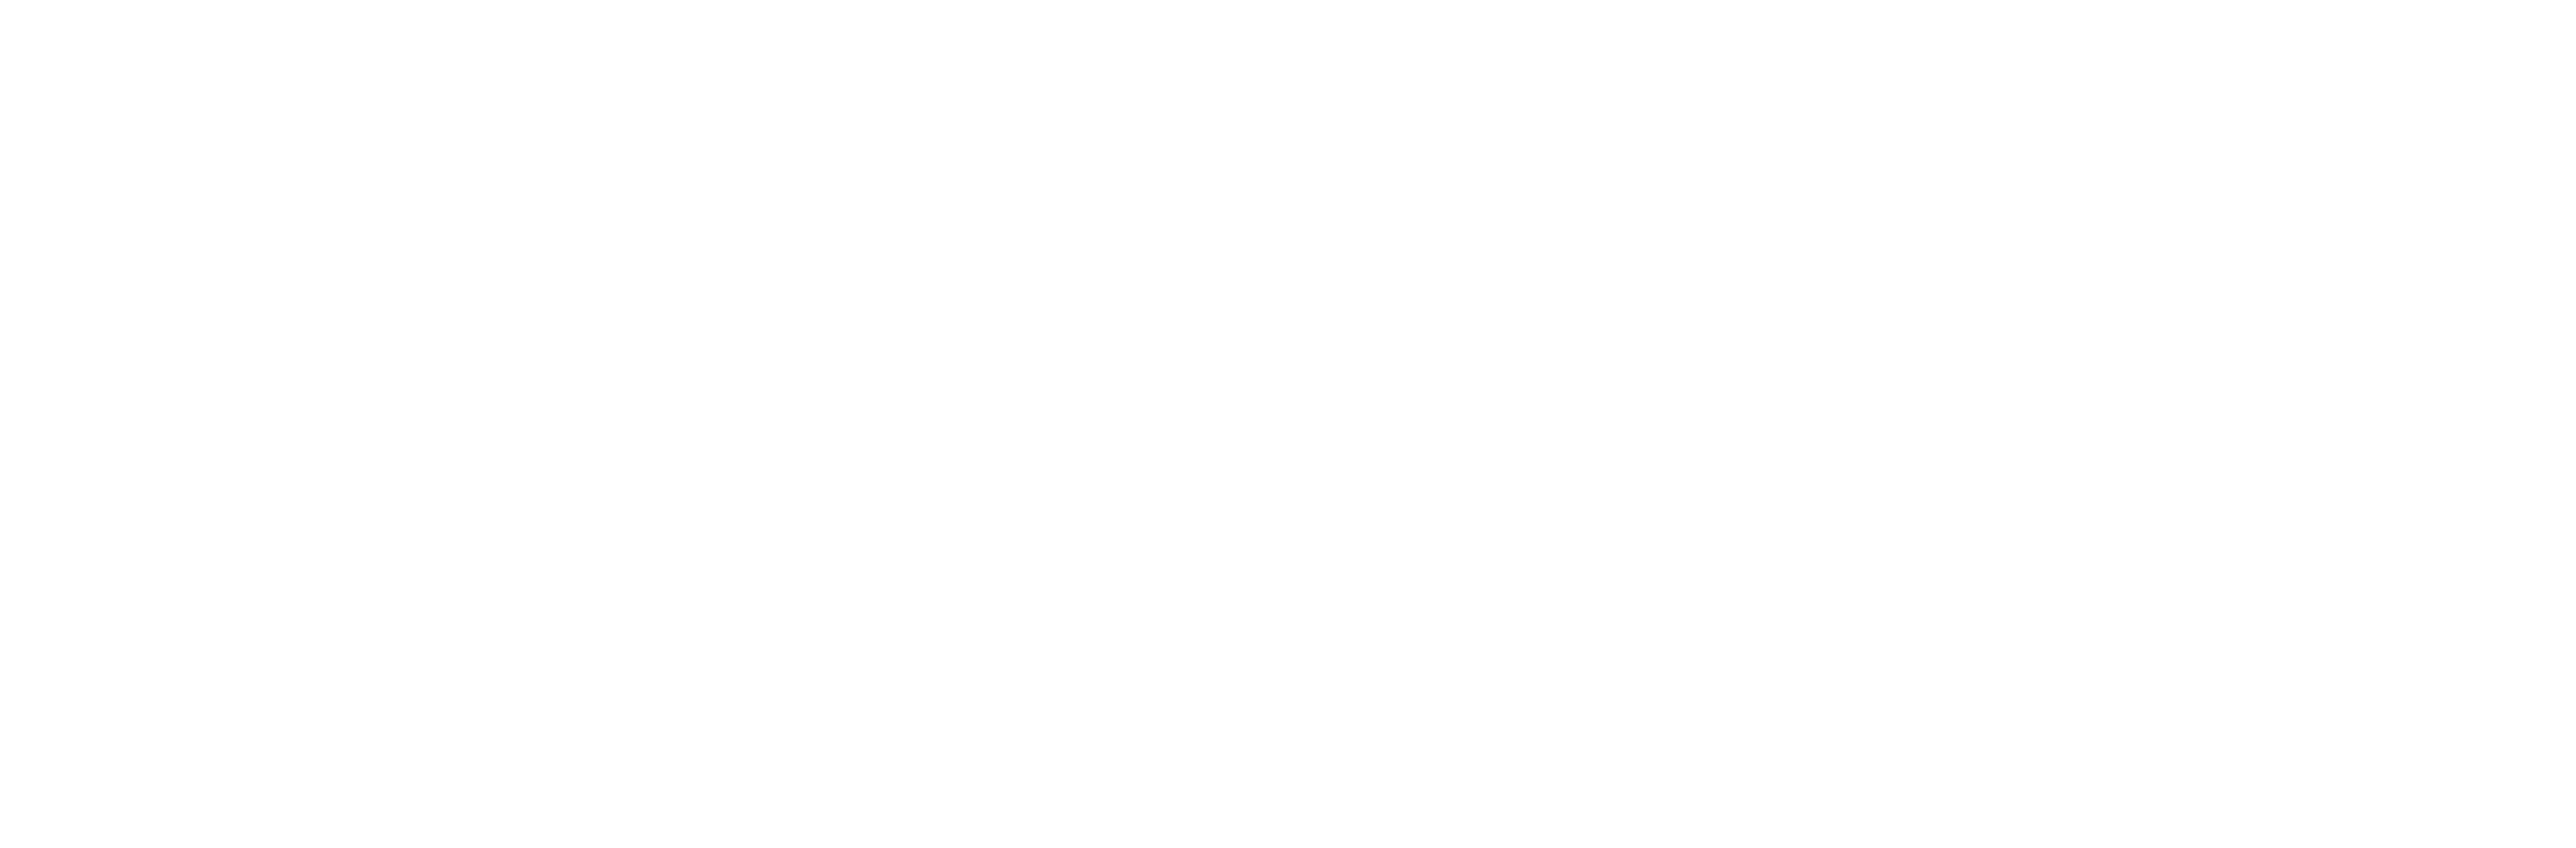 Google White Logo